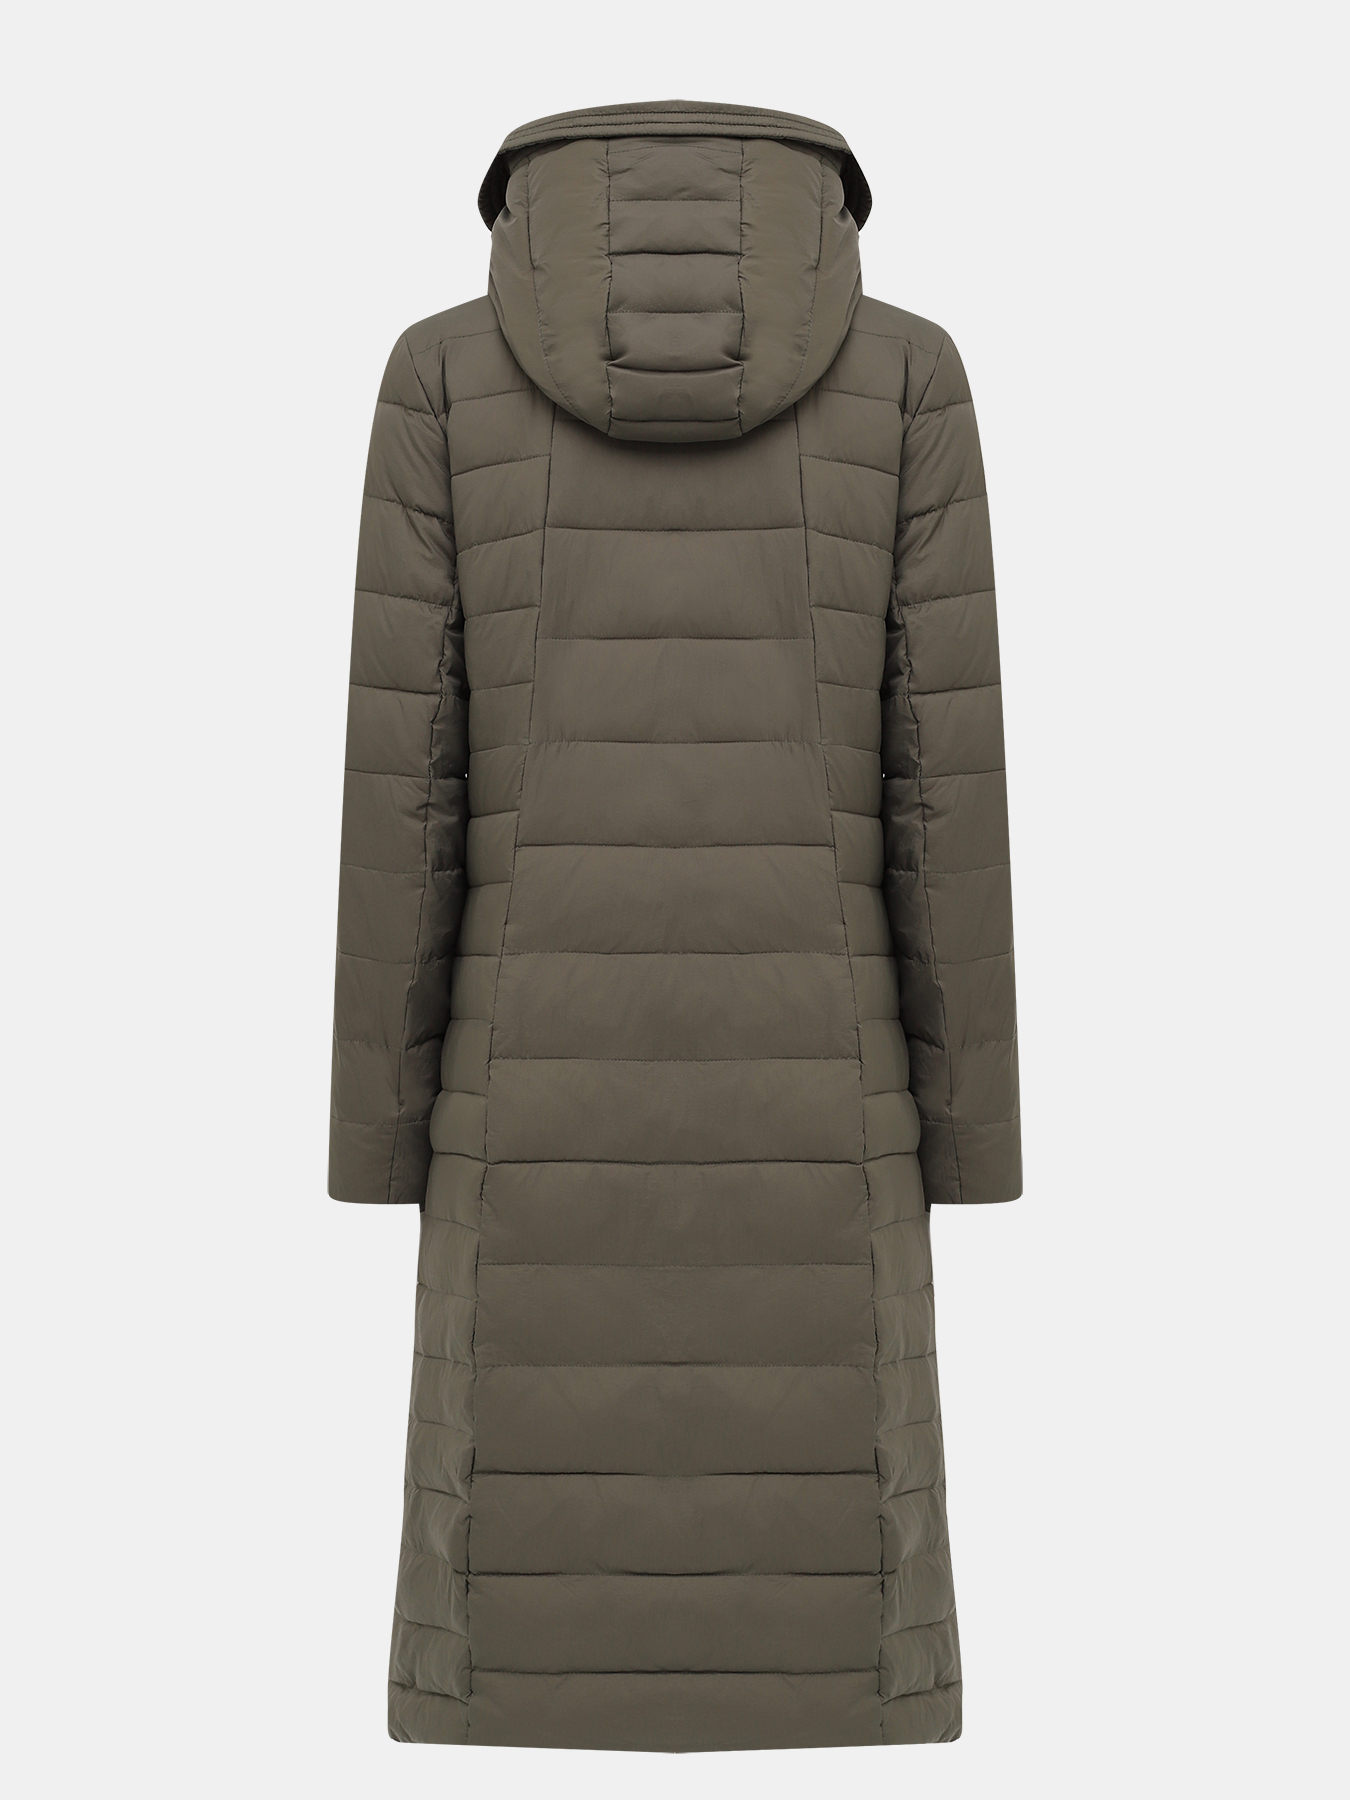 Пальто зимнее Alessandro Manzoni Purpur 384502-241, цвет хаки, размер 46-48 - фото 2